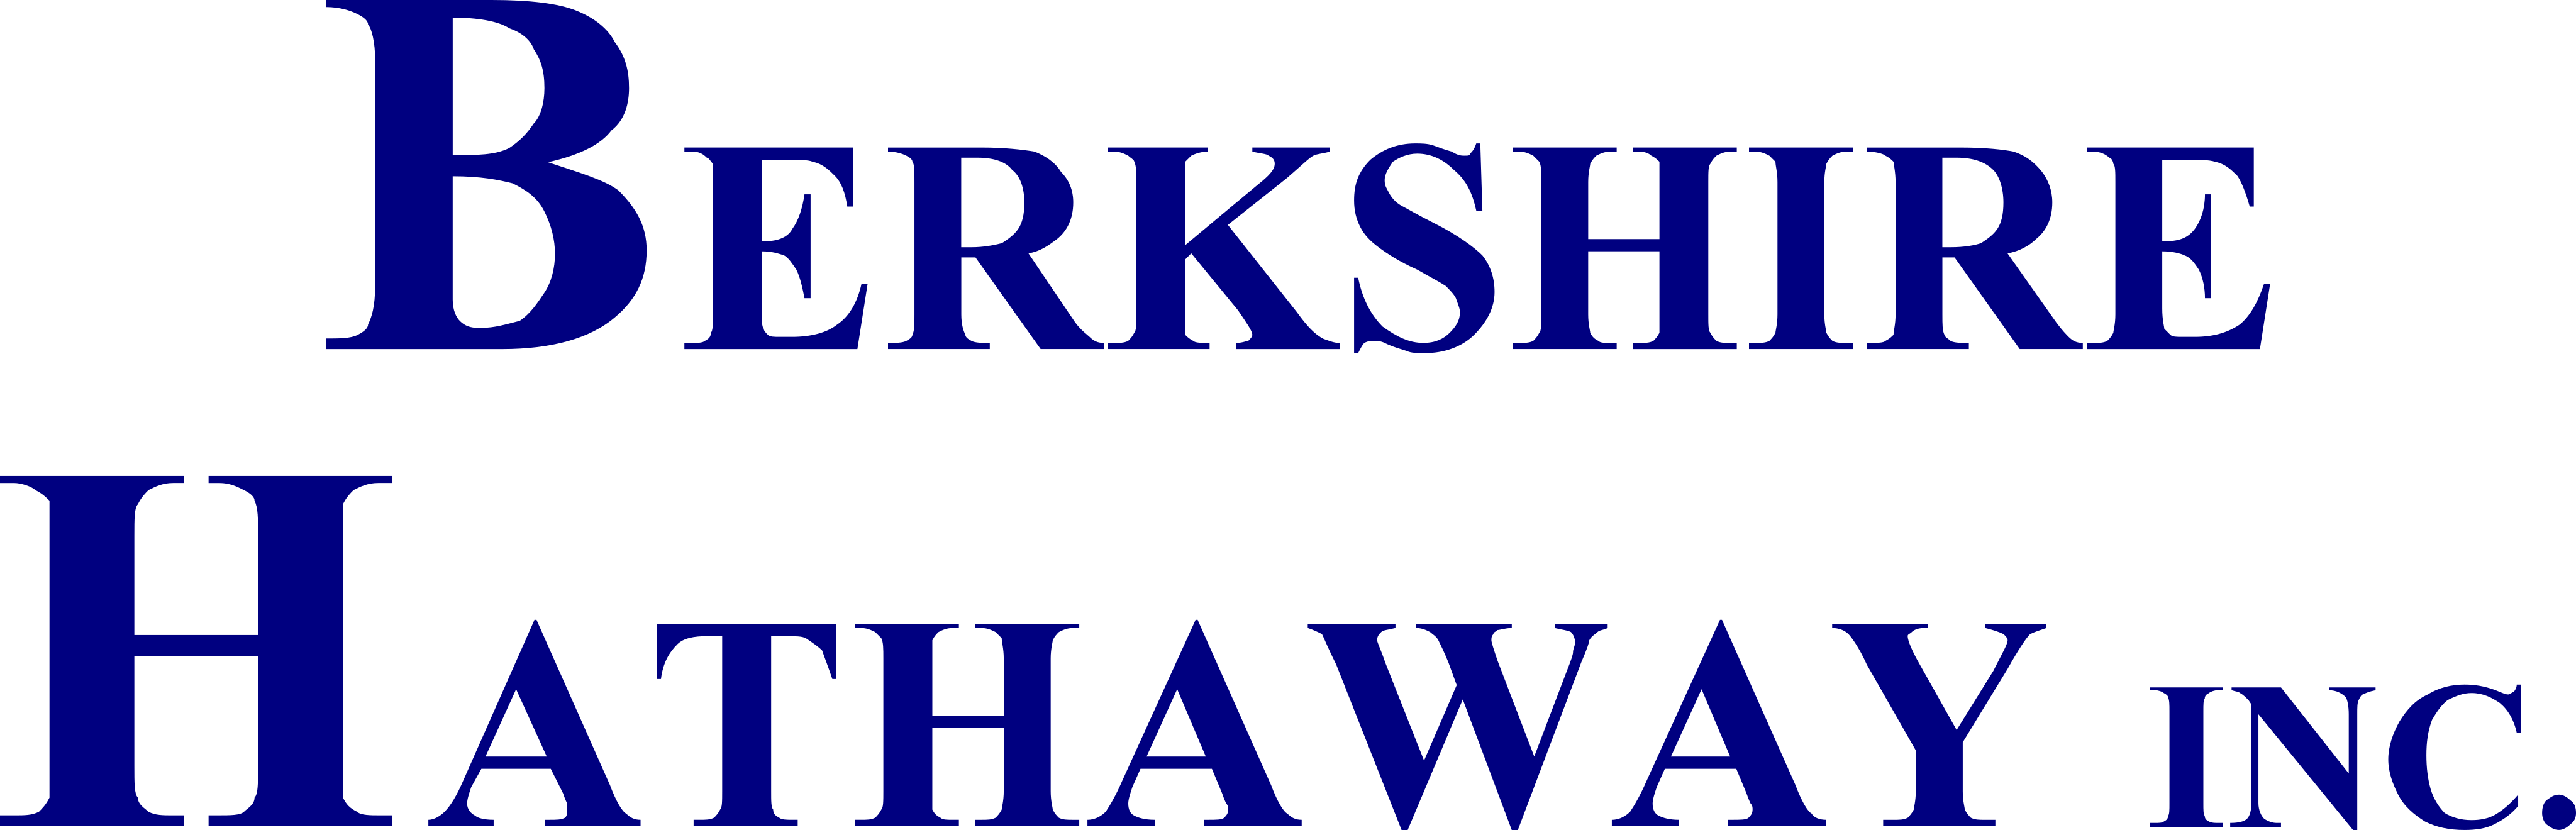 Berkshire Hathaway Logo - PNG and Vector - Logo Download